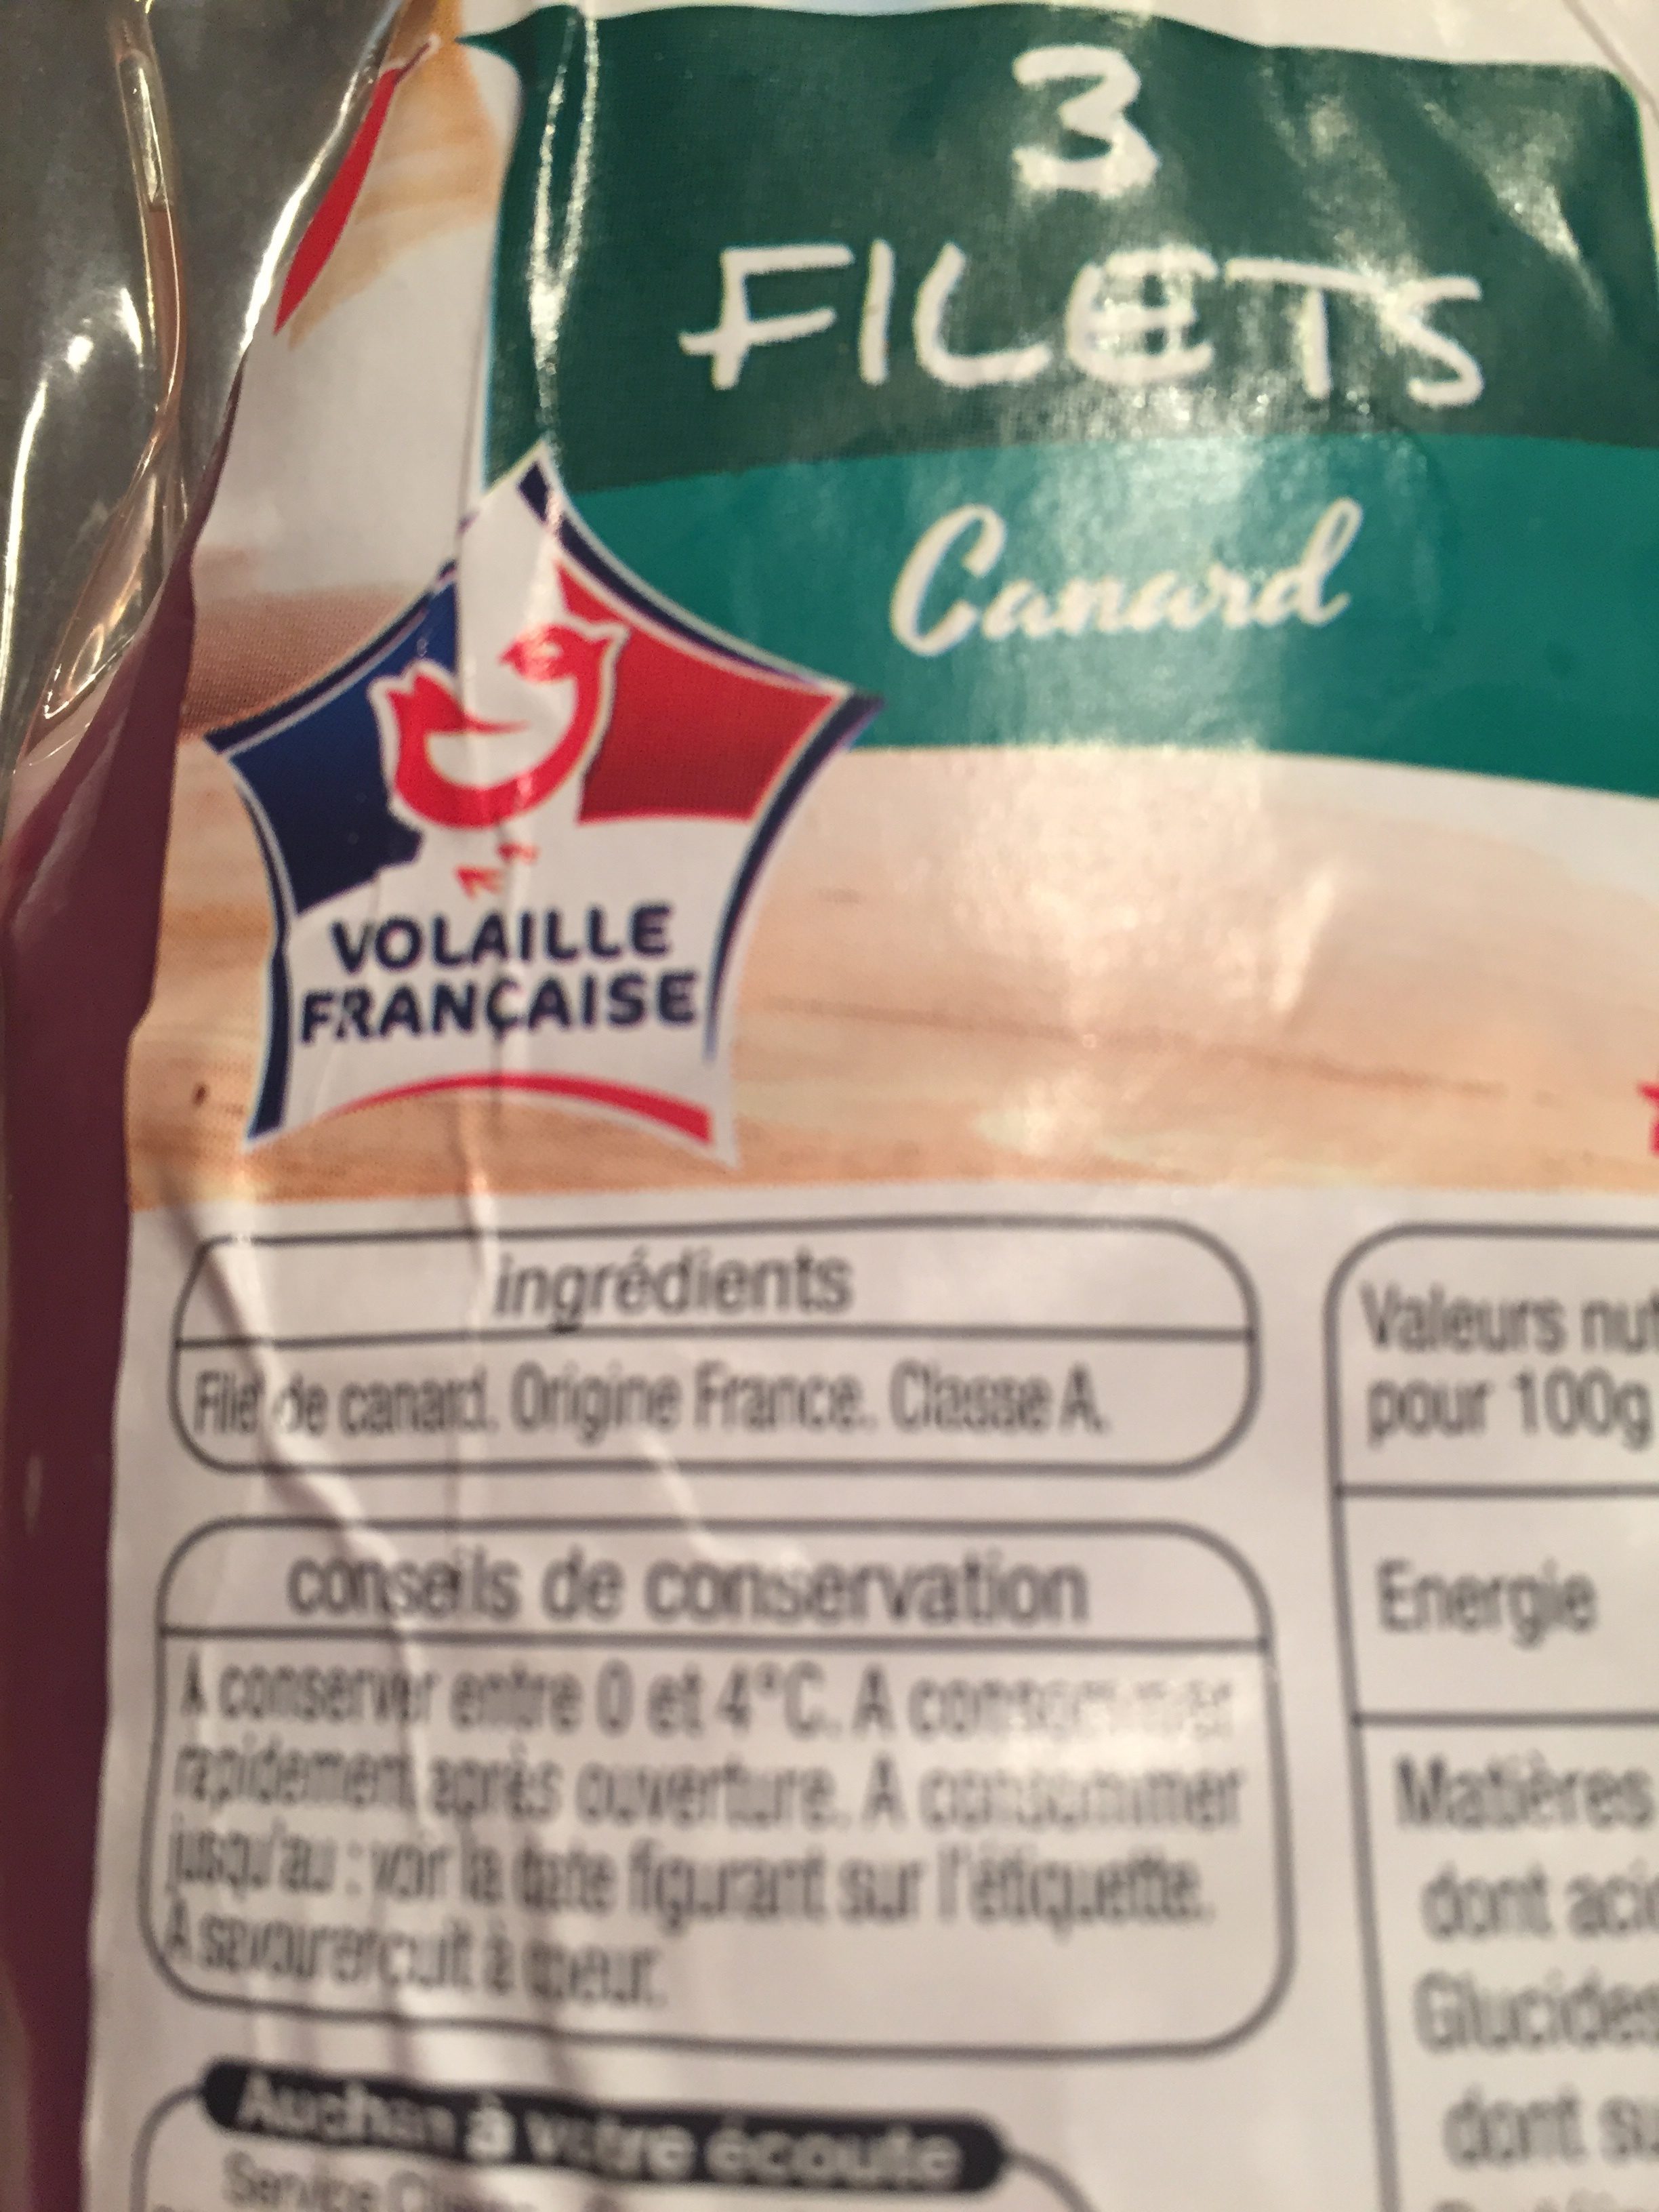 Filets de canard - Ingredienser - fr